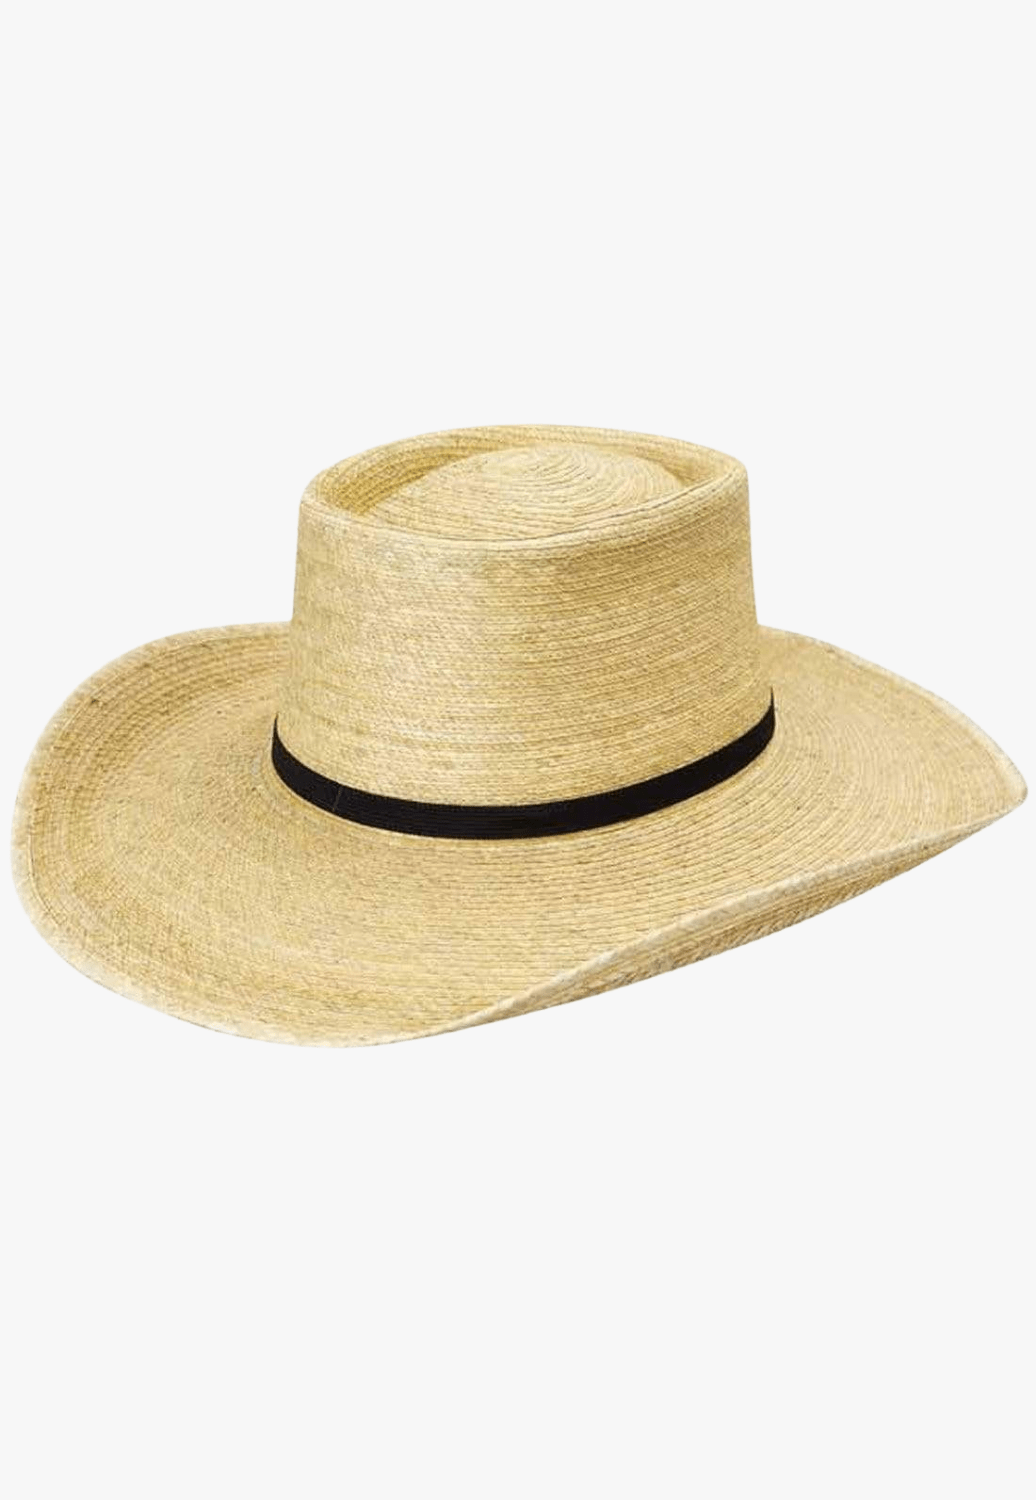 Sunbody HATS - Straw Sunbody 4inch Brim Box Top Hat